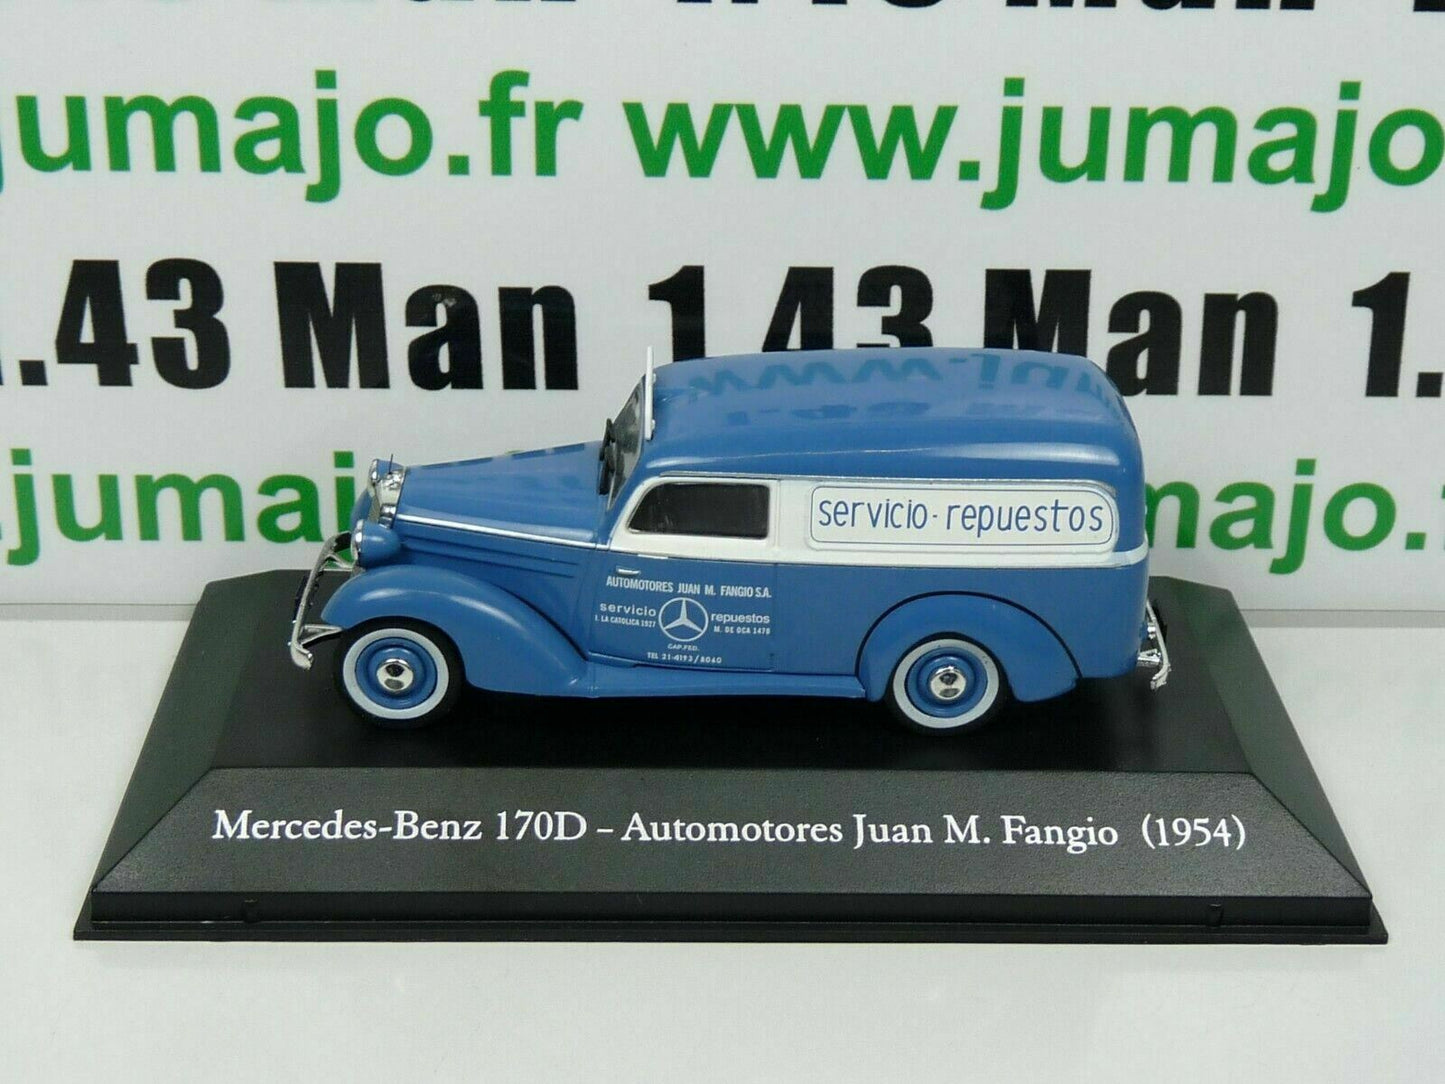 SER21 1/43 SALVAT Vehiculos Inolv. Servicios: Mercedes-Benz 170D Fangio (1954)